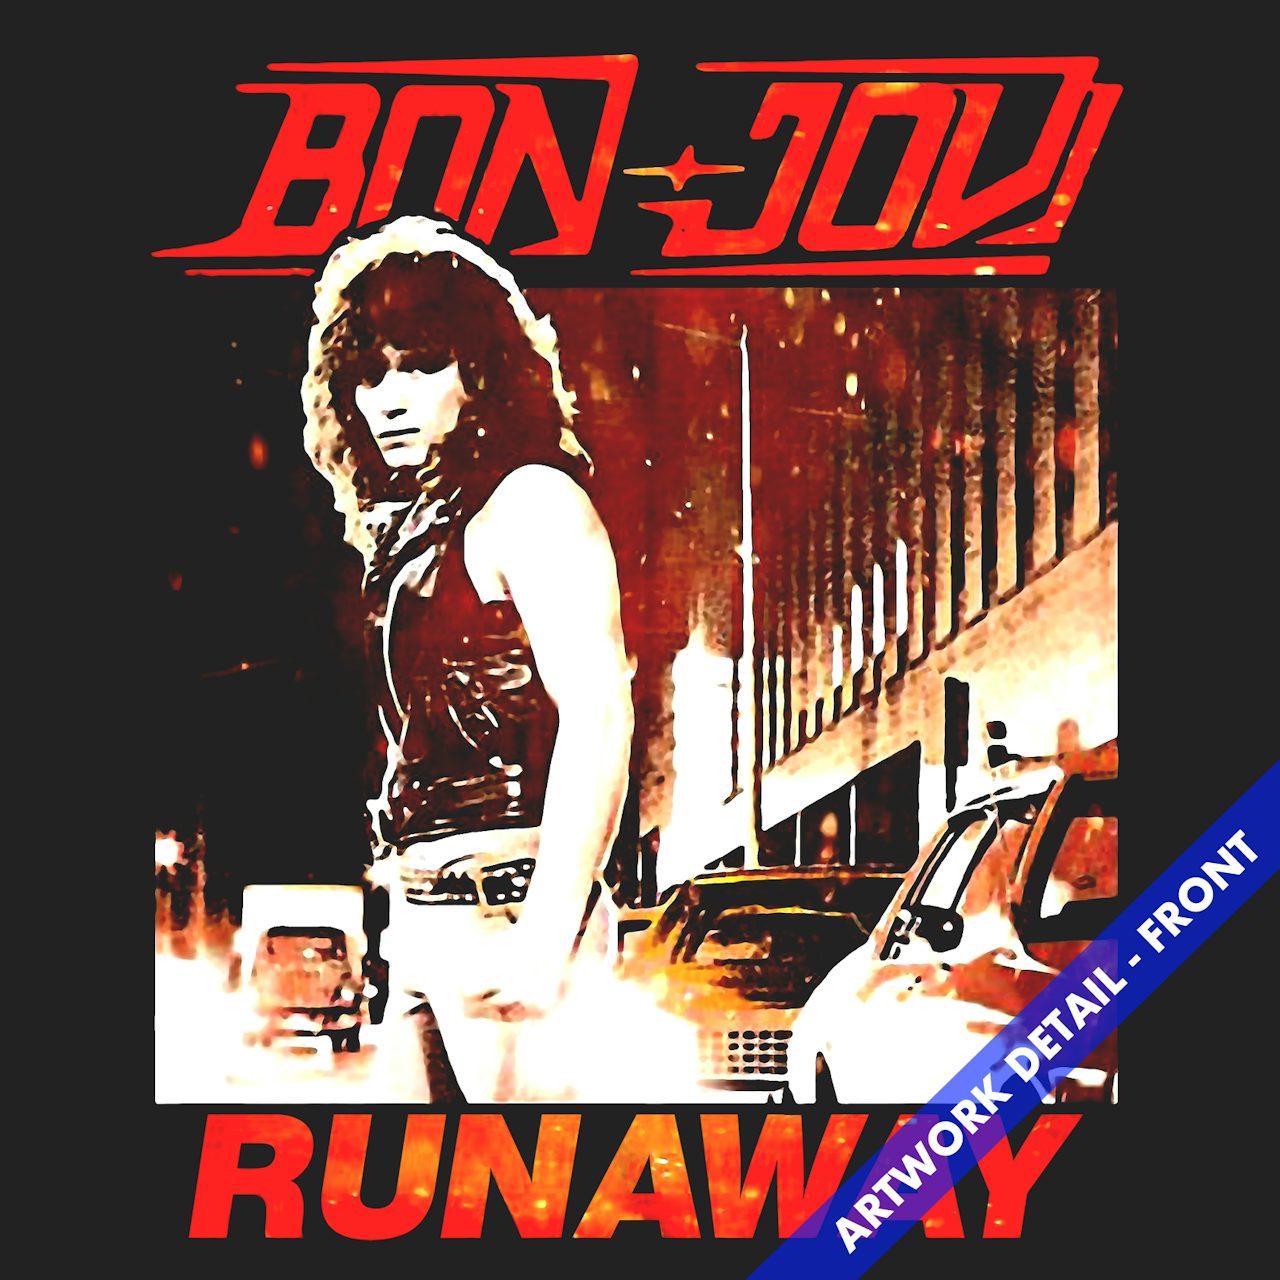 Blaze Of Glory How Jon Bon Jovi Shot To Kill With His Debut Solo Album